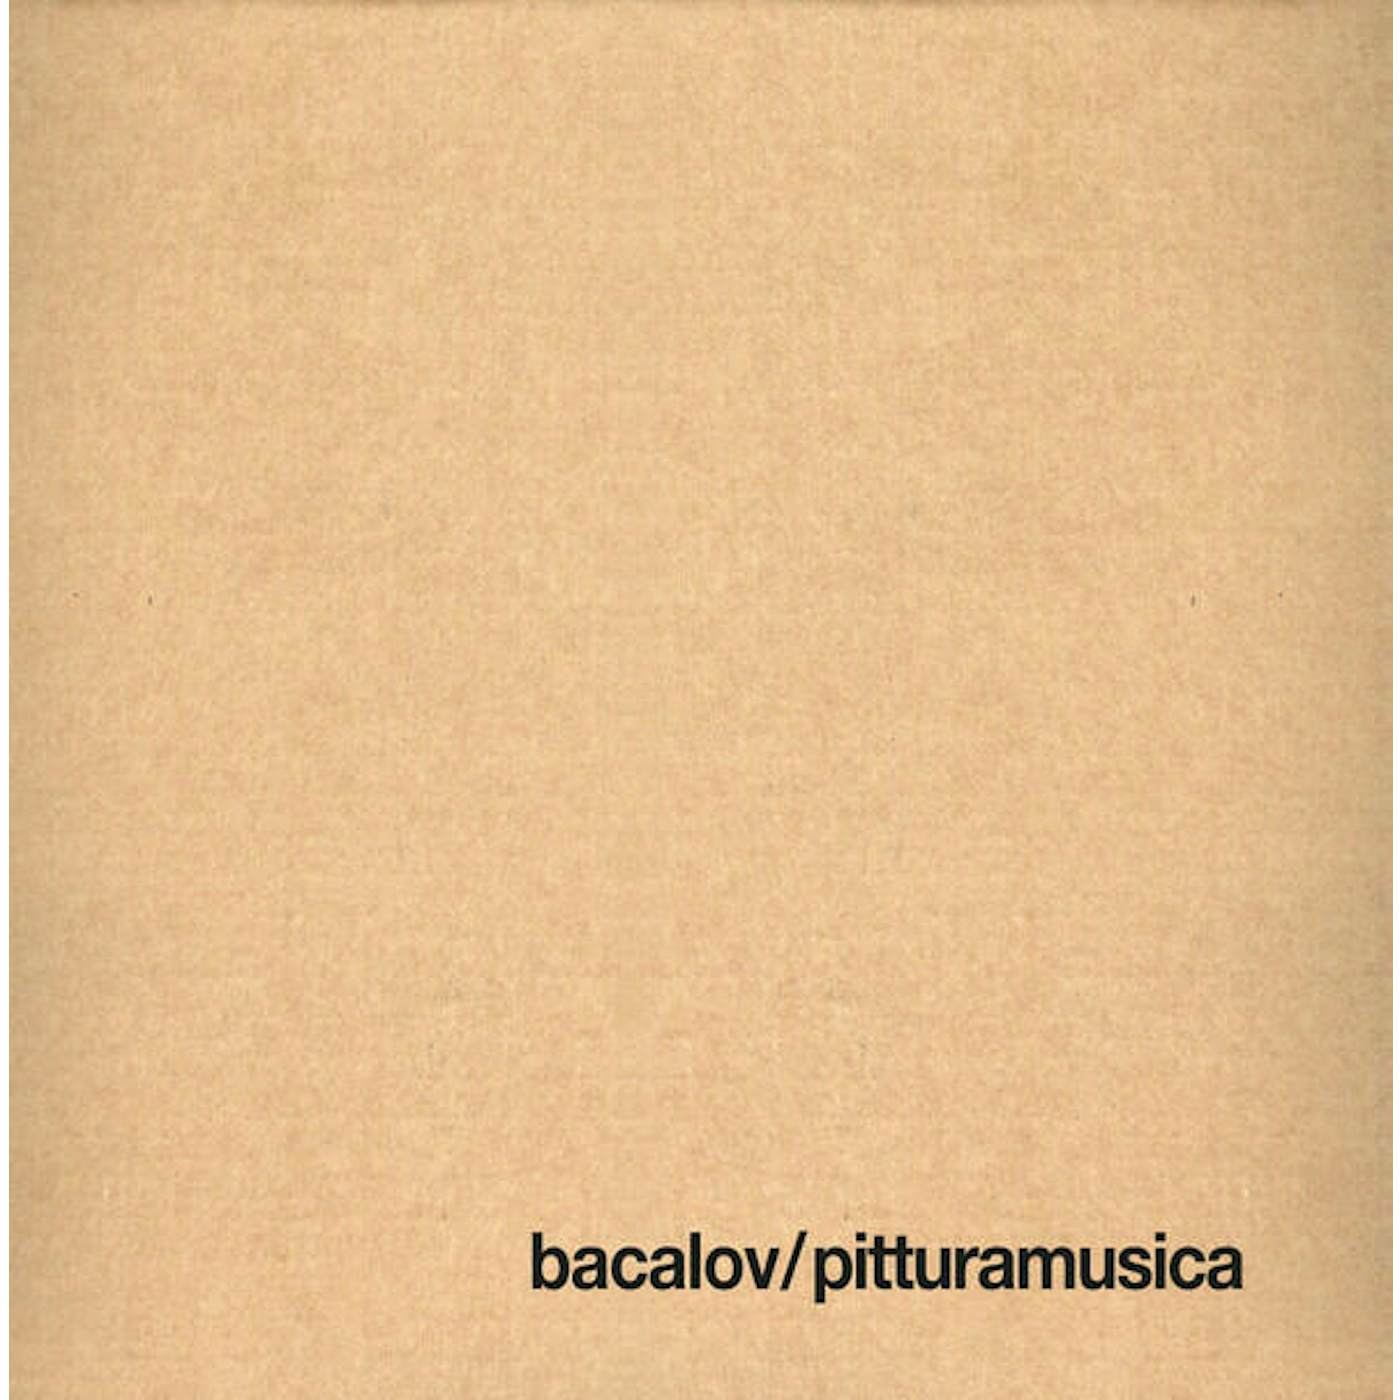 Luis Bacalov Pitturamusica Vinyl Record